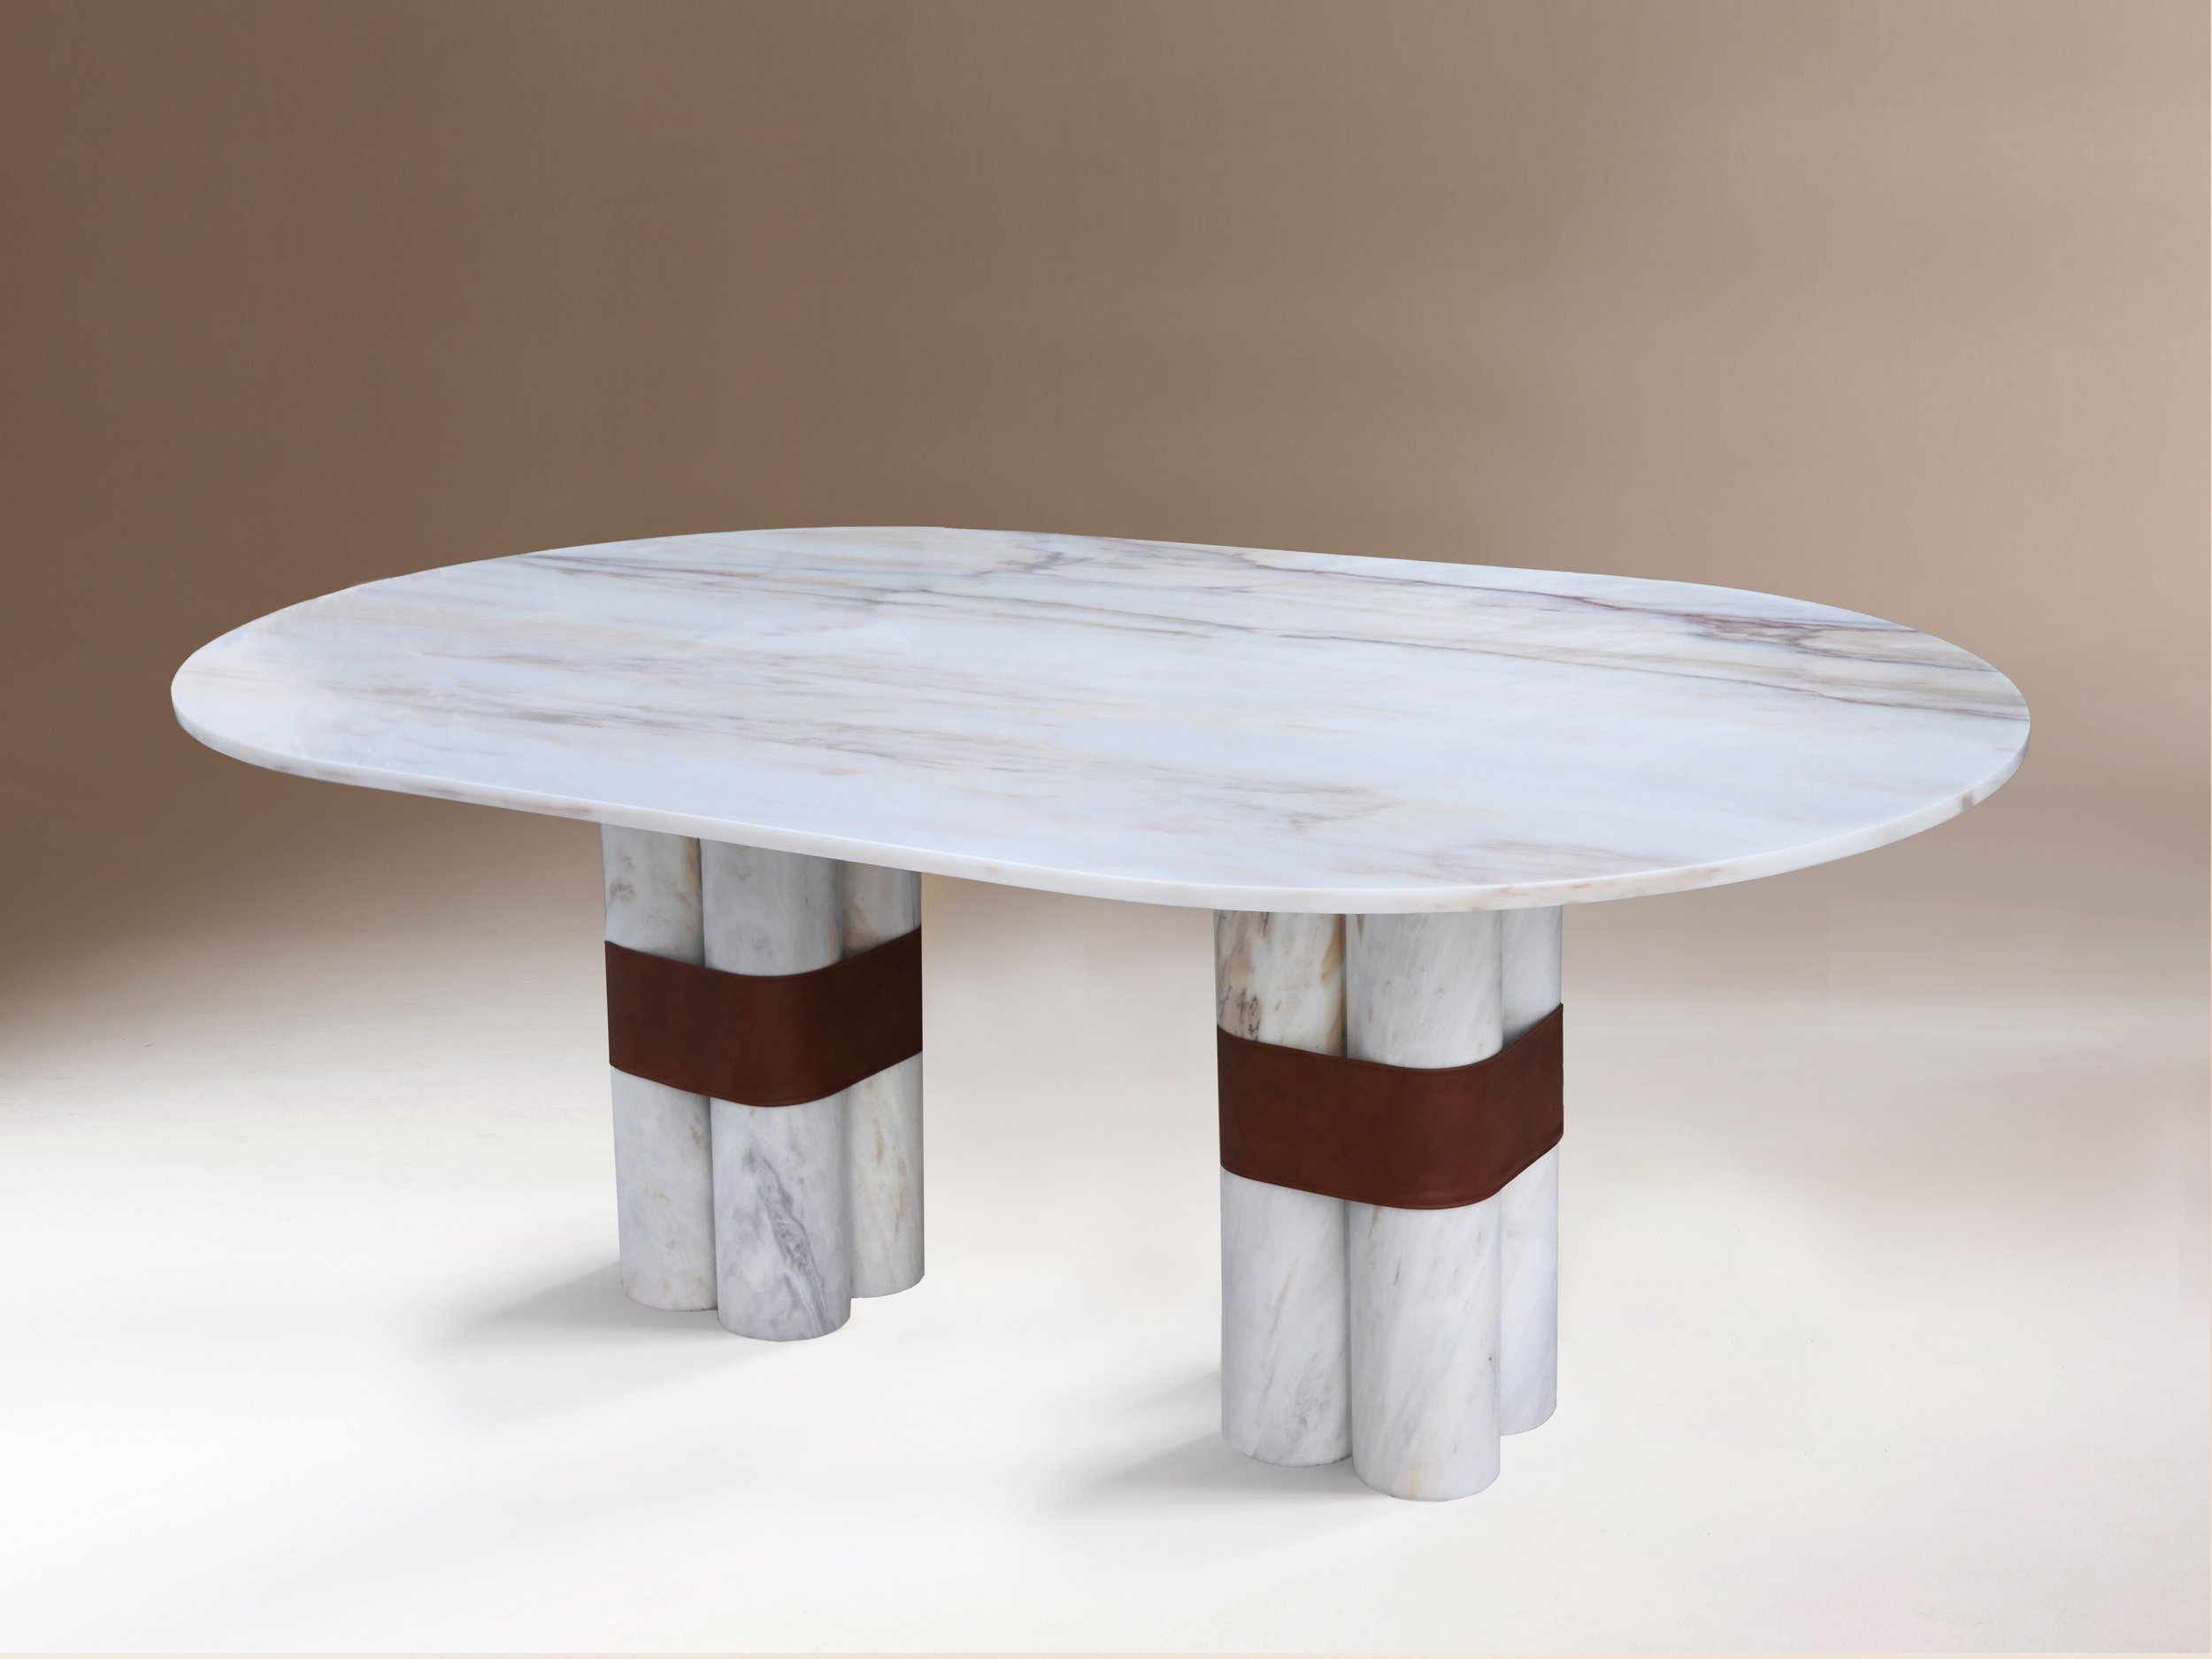 marble dining table design dovain studio sergio prieto interior design best table marble portugal.jpg